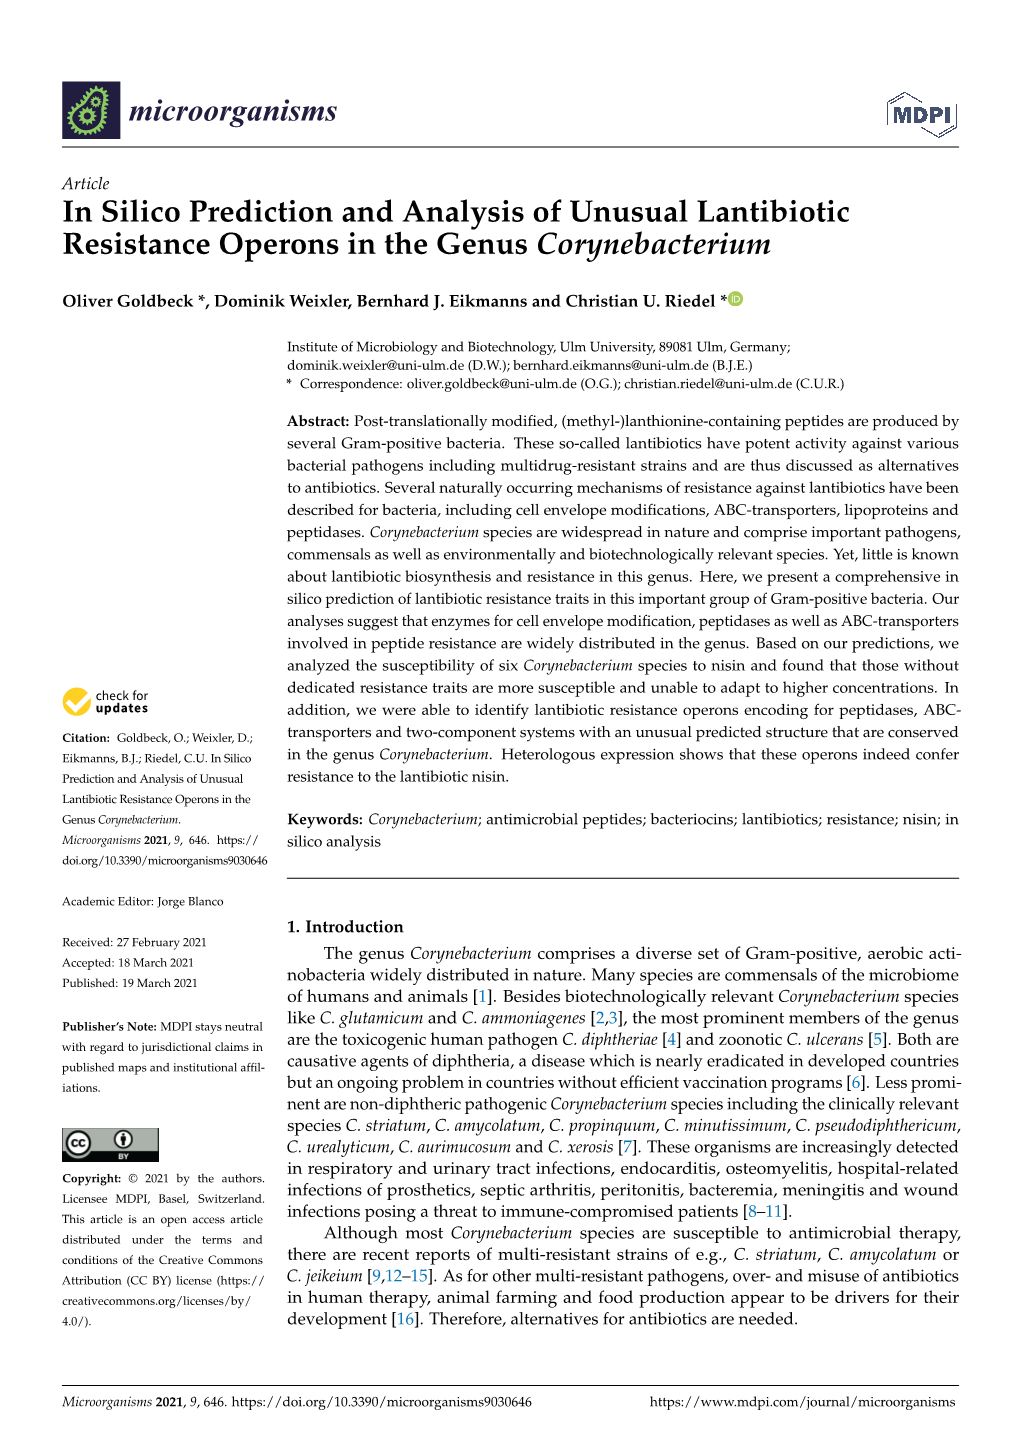 In Silico Prediction and Analysis of Unusual Lantibiotic Resistance Operons in the Genus Corynebacterium